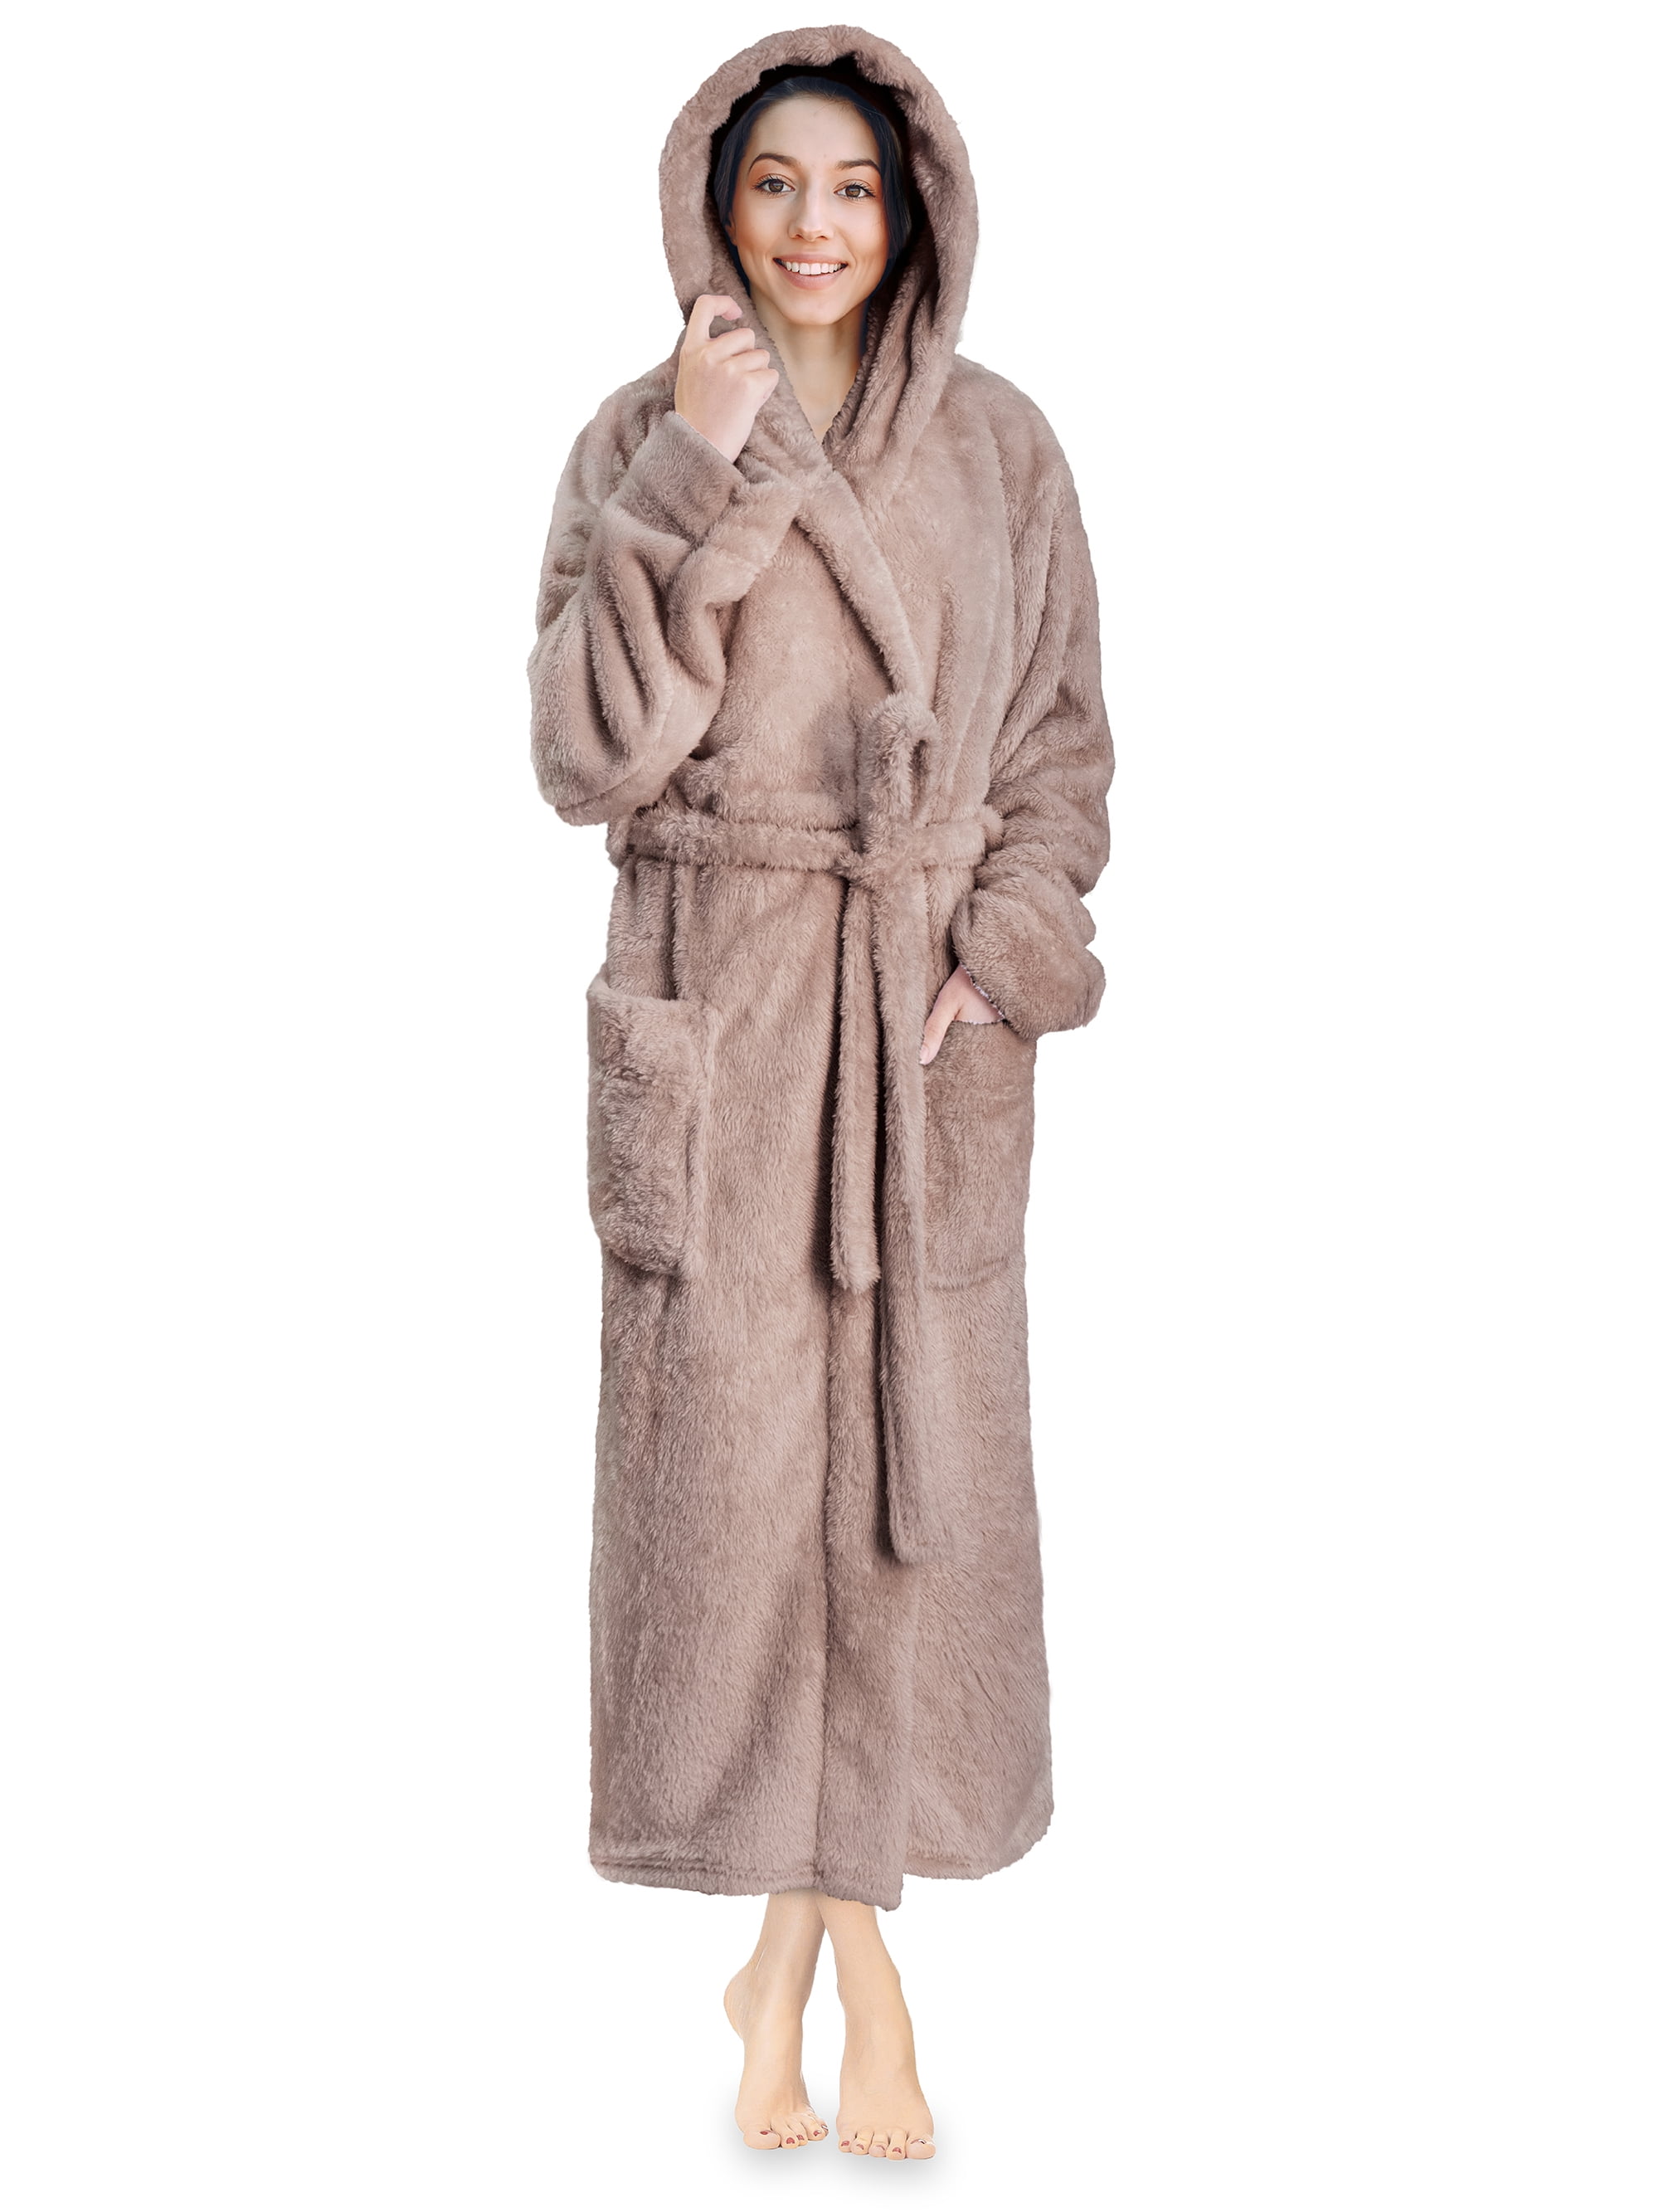 Avamo Ladies Sherpa Robes Solid Color Sleepwear Hooded Fuzzy Plush Bathrobe  Plain Fleece Robe Sleeping Dressing Gown Gray XL 